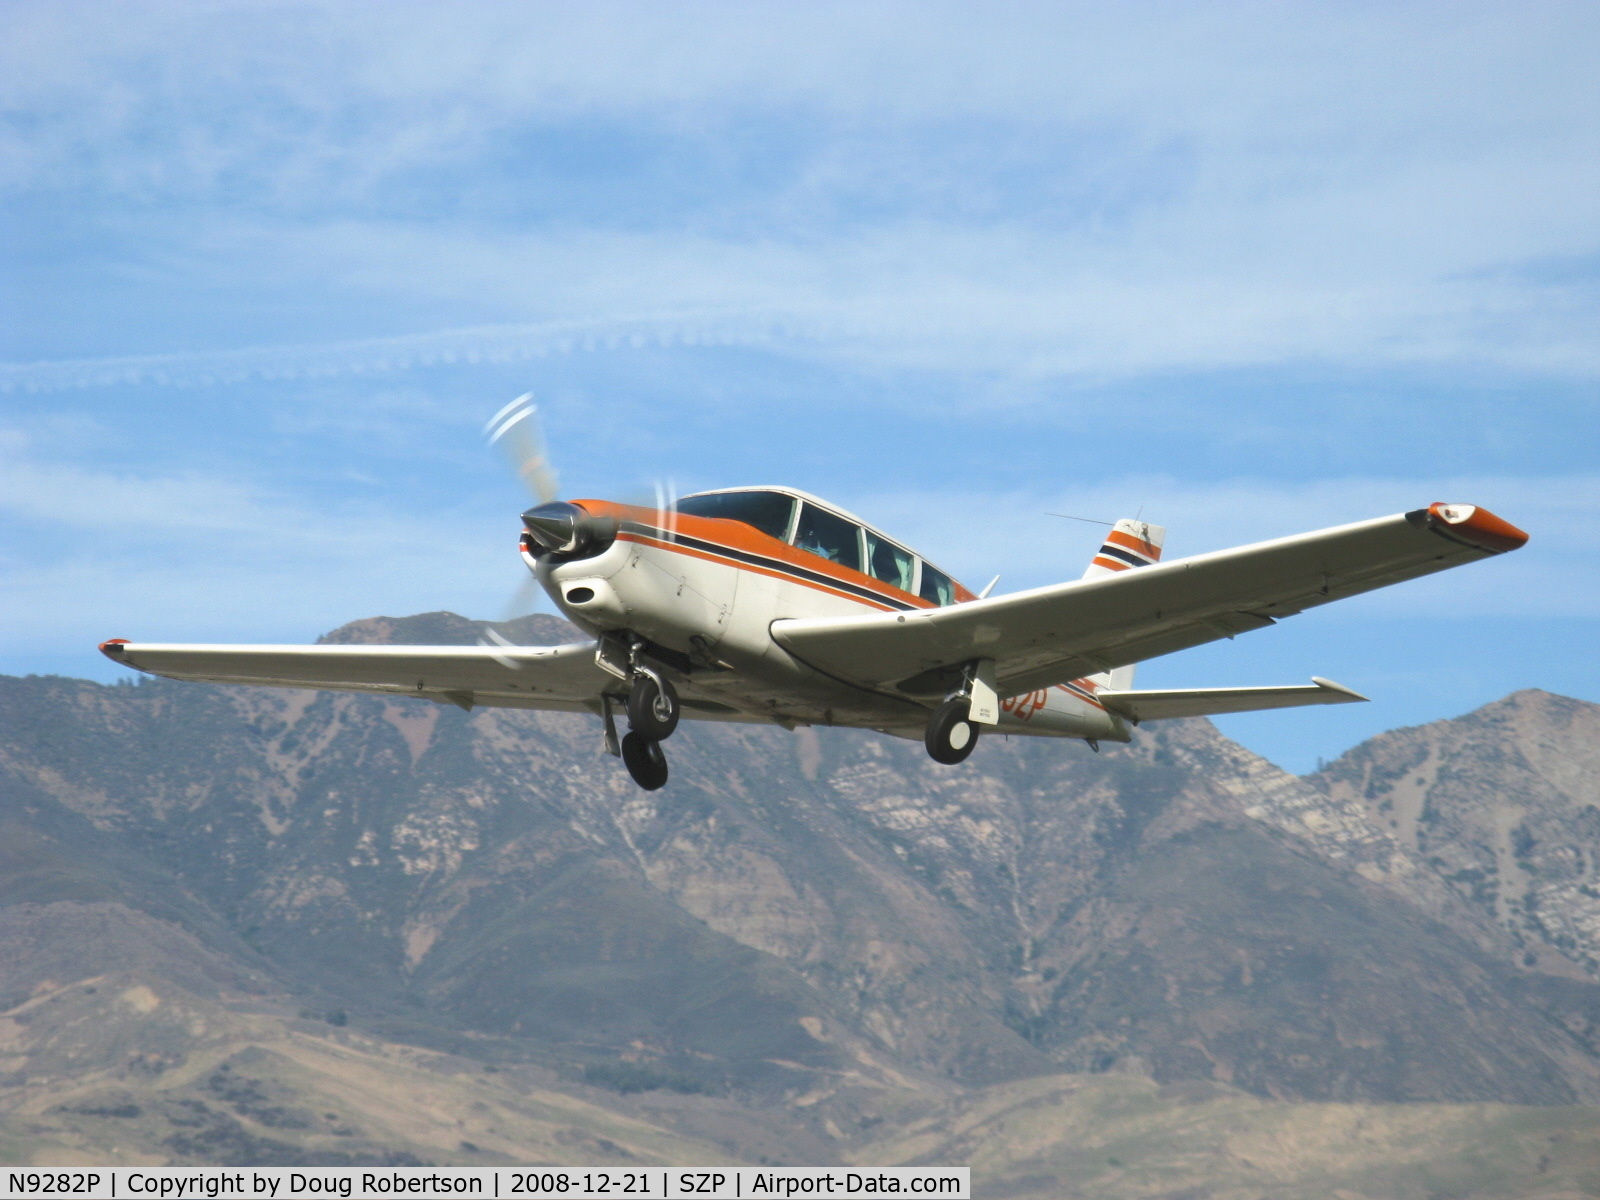 N9282P, 1968 Piper PA-24-260 C/N 24-4782, 1968 Piper PA-24-260B COMANCHE, Lycoming IO-540-D4A5 260 Hp, Experimental class, takeoff climb Rwy 22, gear coming up